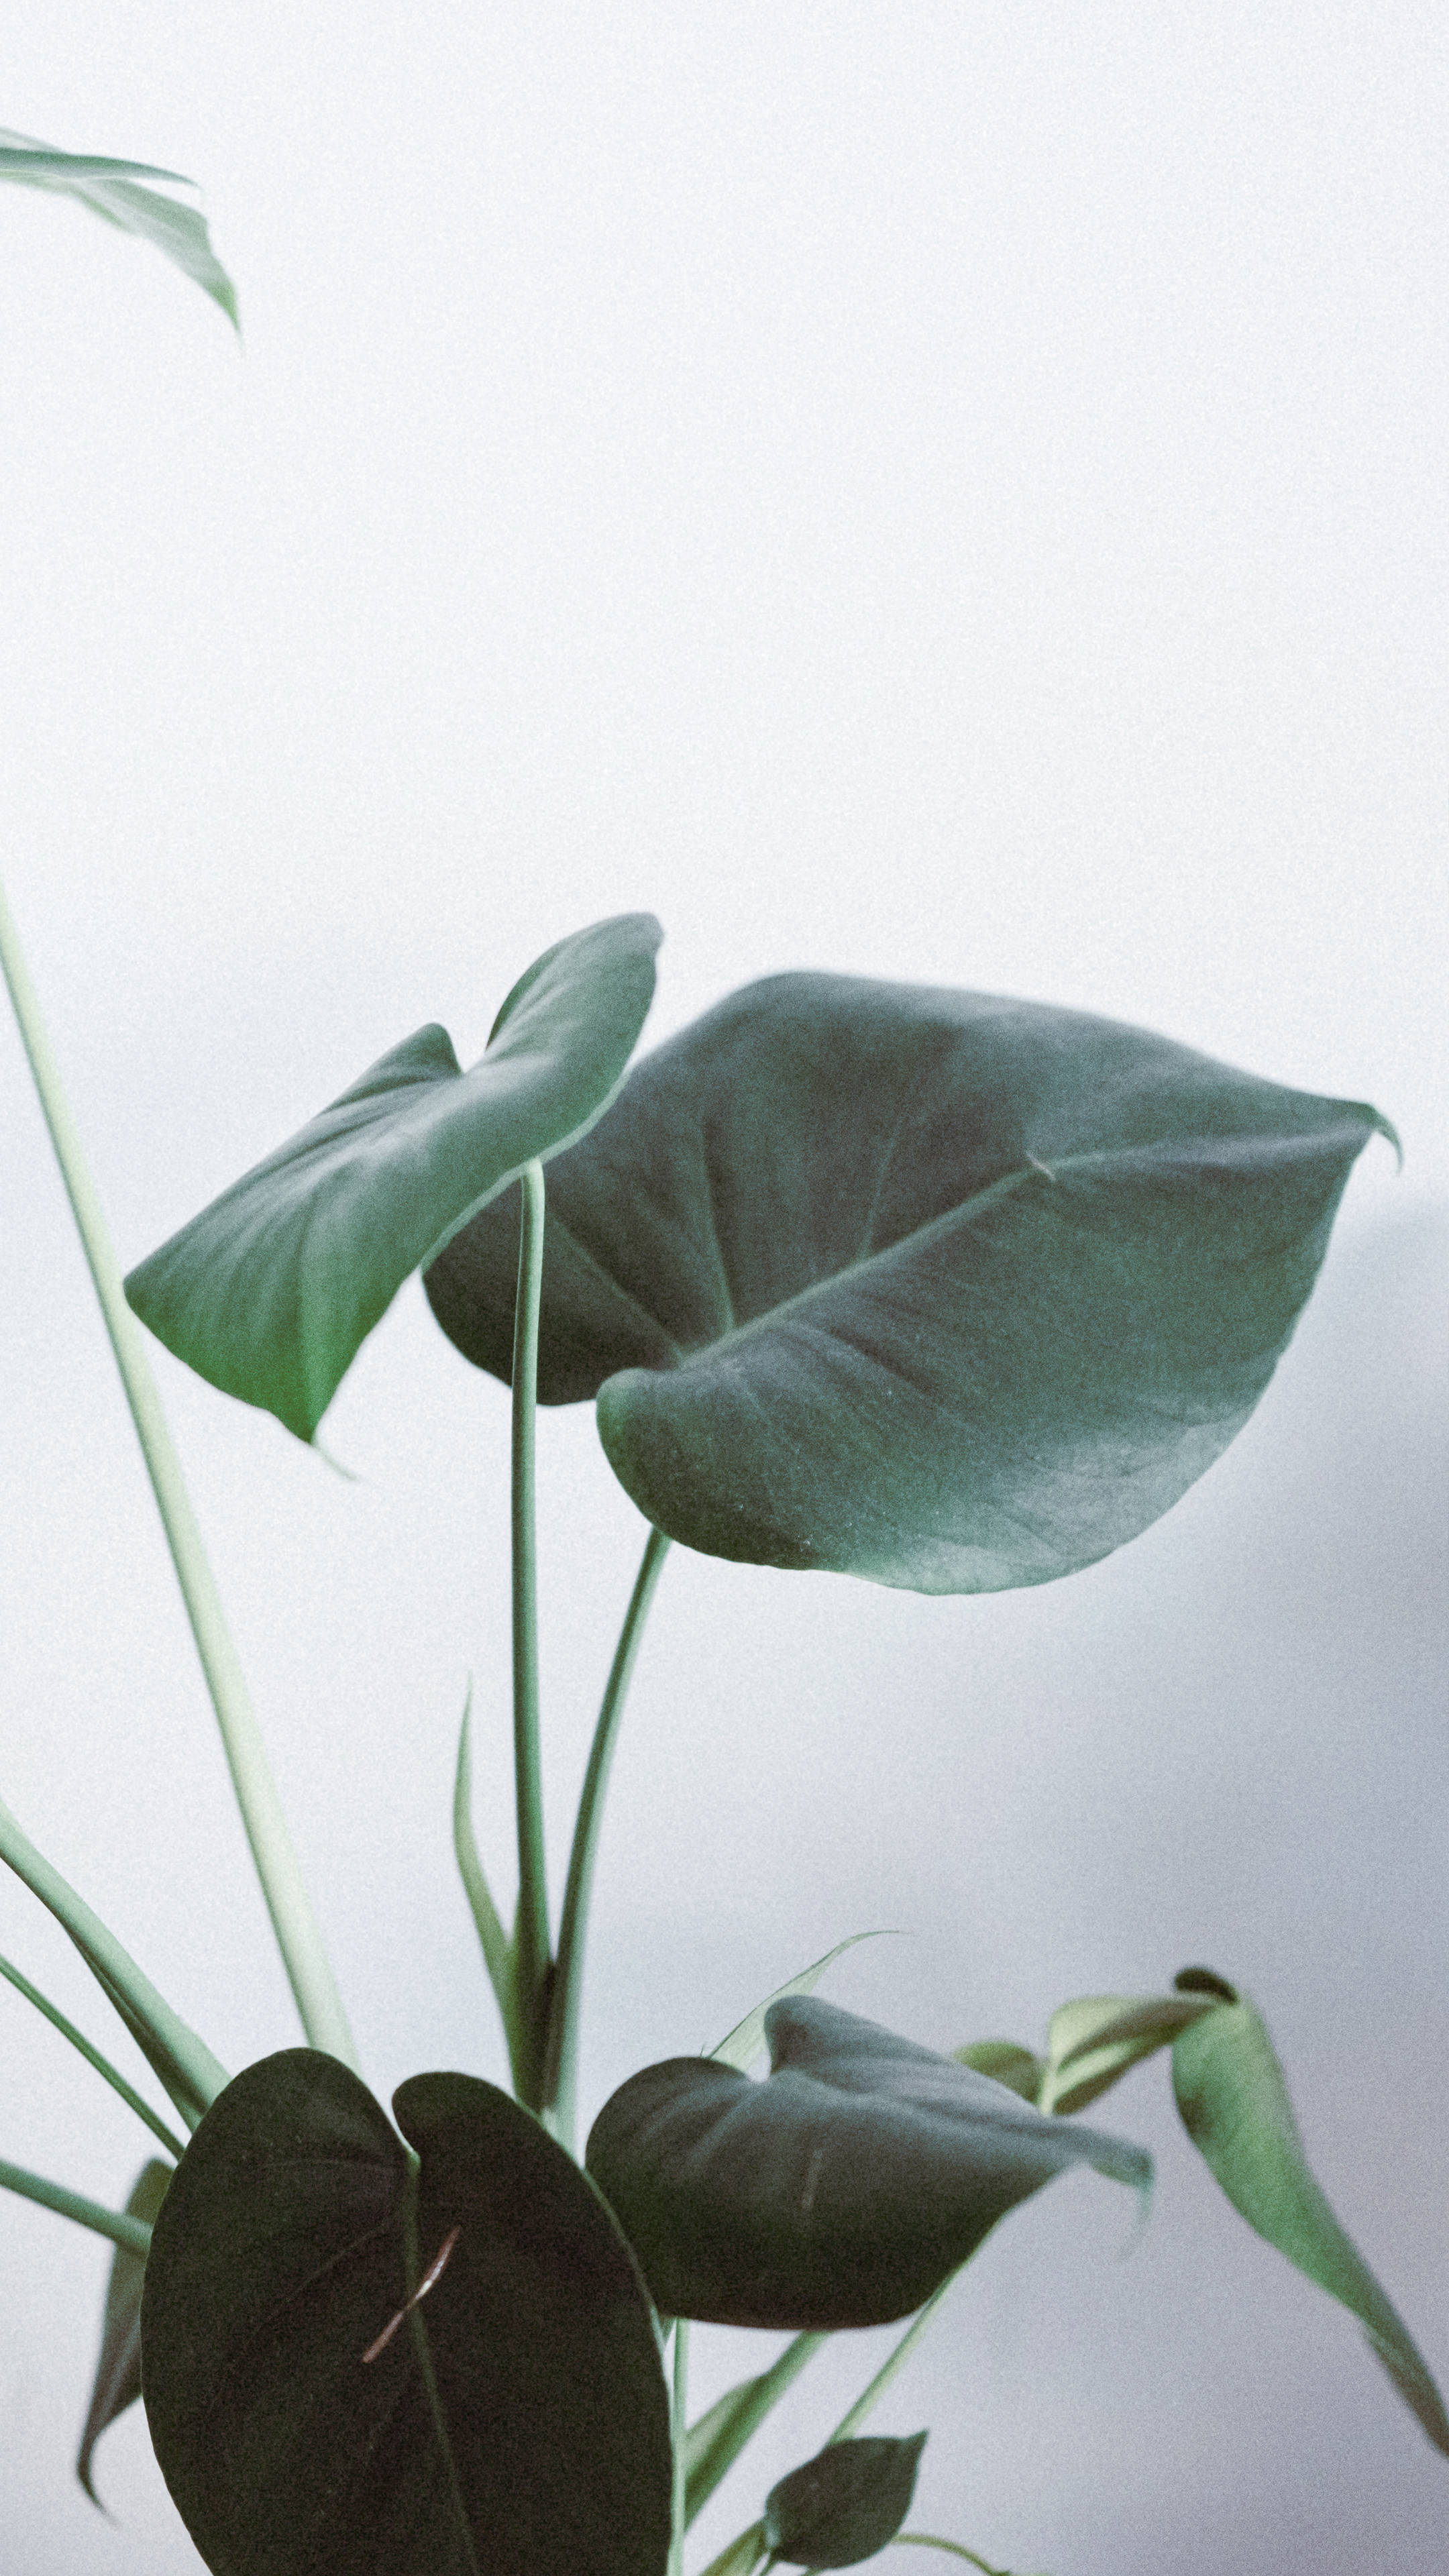 Simplicity In Nature - Minimalistic Monstera Plant Wallpaper